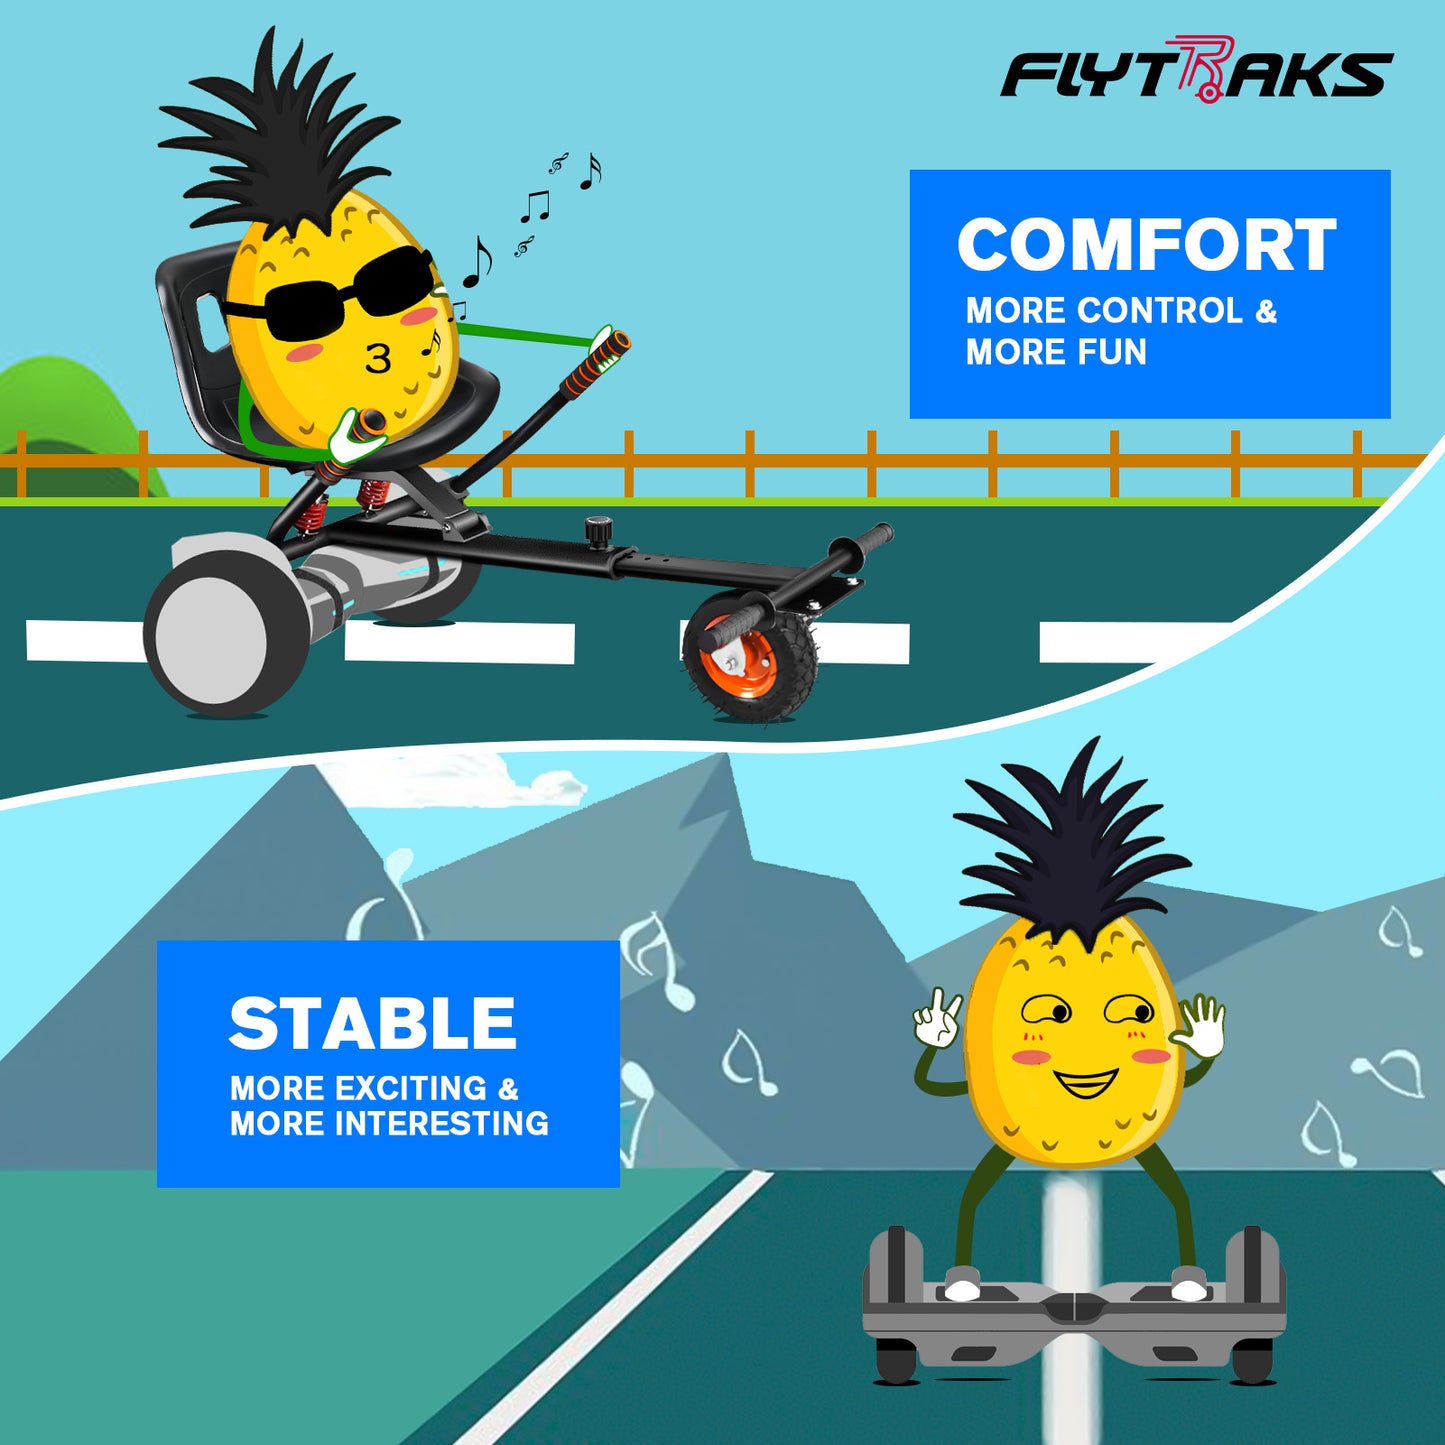 Flytraks K2 Hoverboard Go Kart ,Hoverboard Seat Attachment Accessory for 6.5" 8" 10" Hover Board, Adjustable Frame Length & Off-Road Rubber Wheel